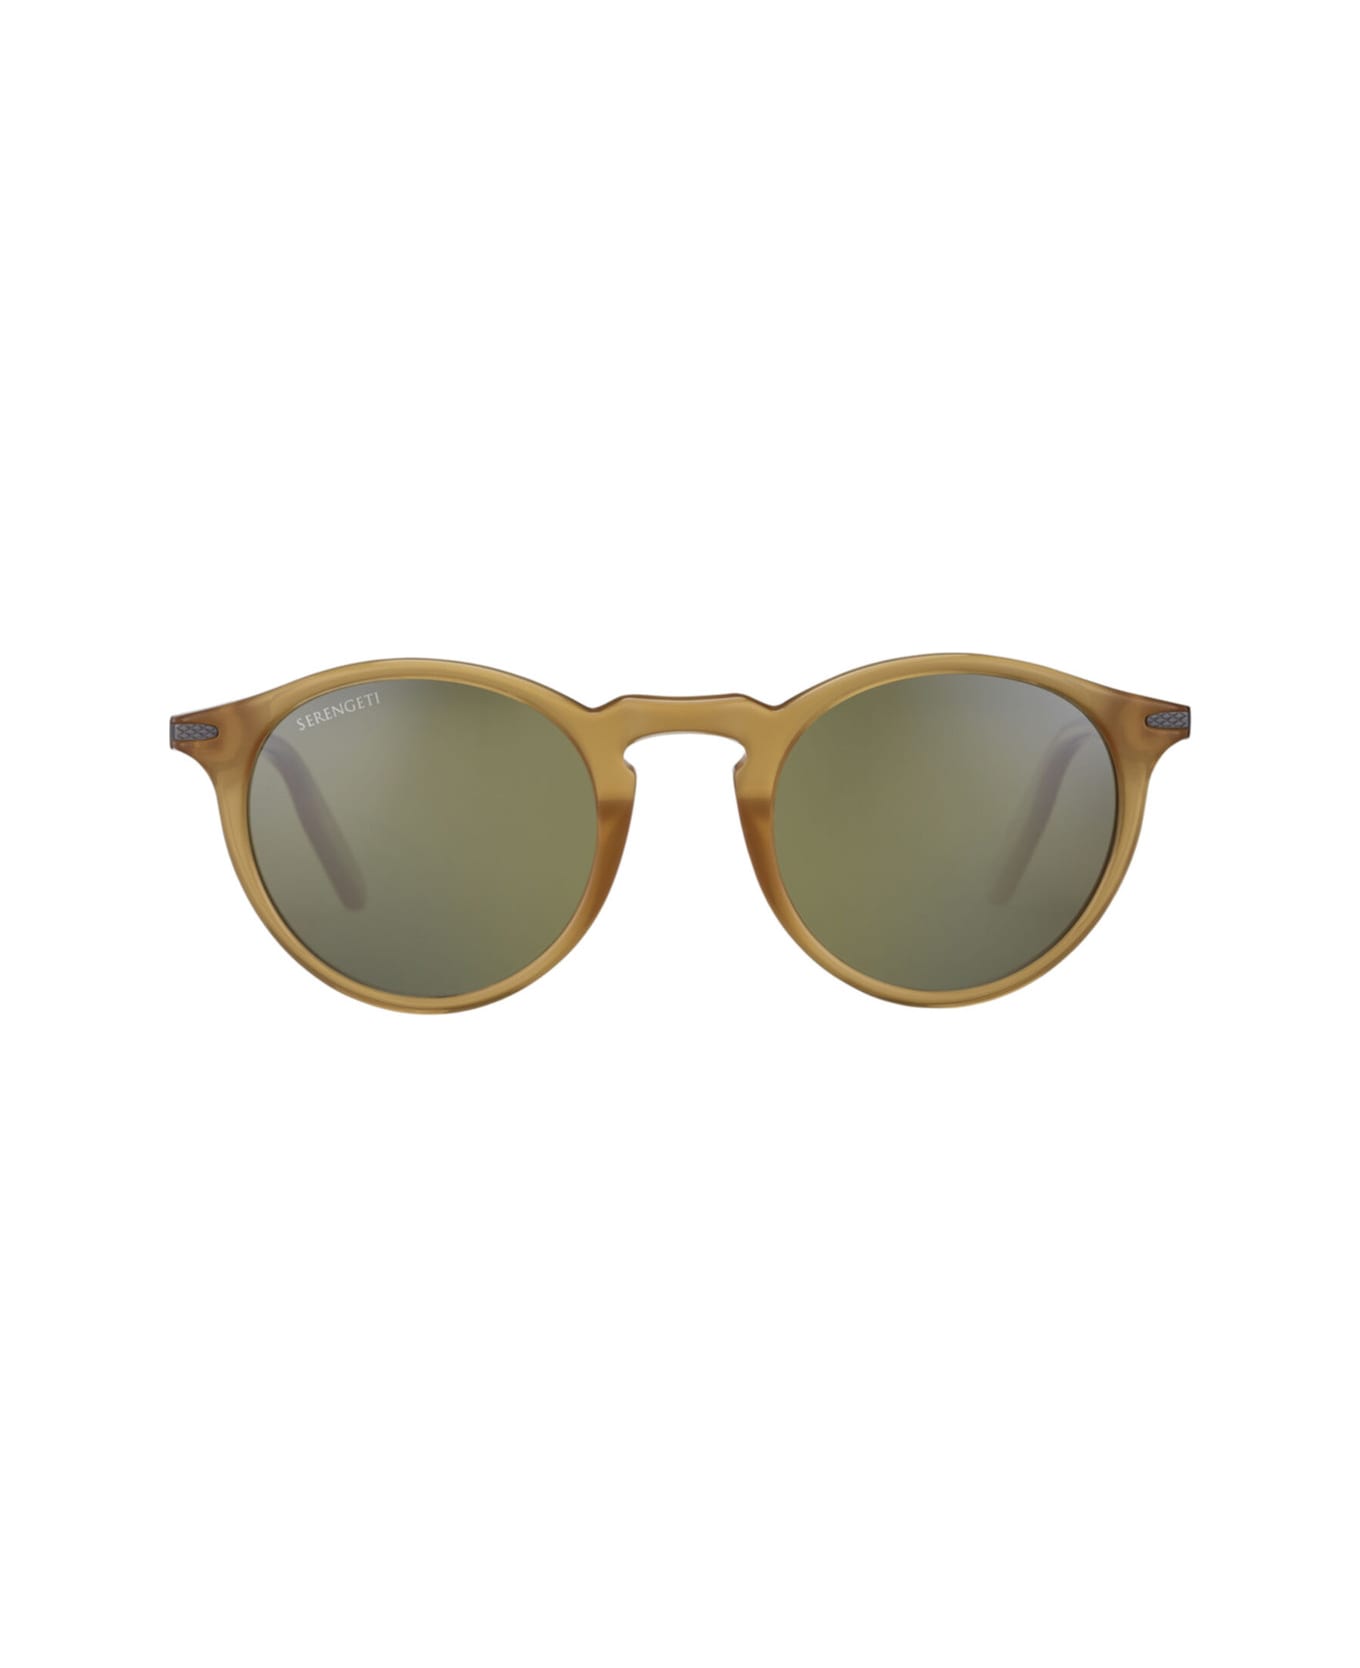 Serengeti Eyewear Raffaele 8951 Sunglasses - Honey サングラス